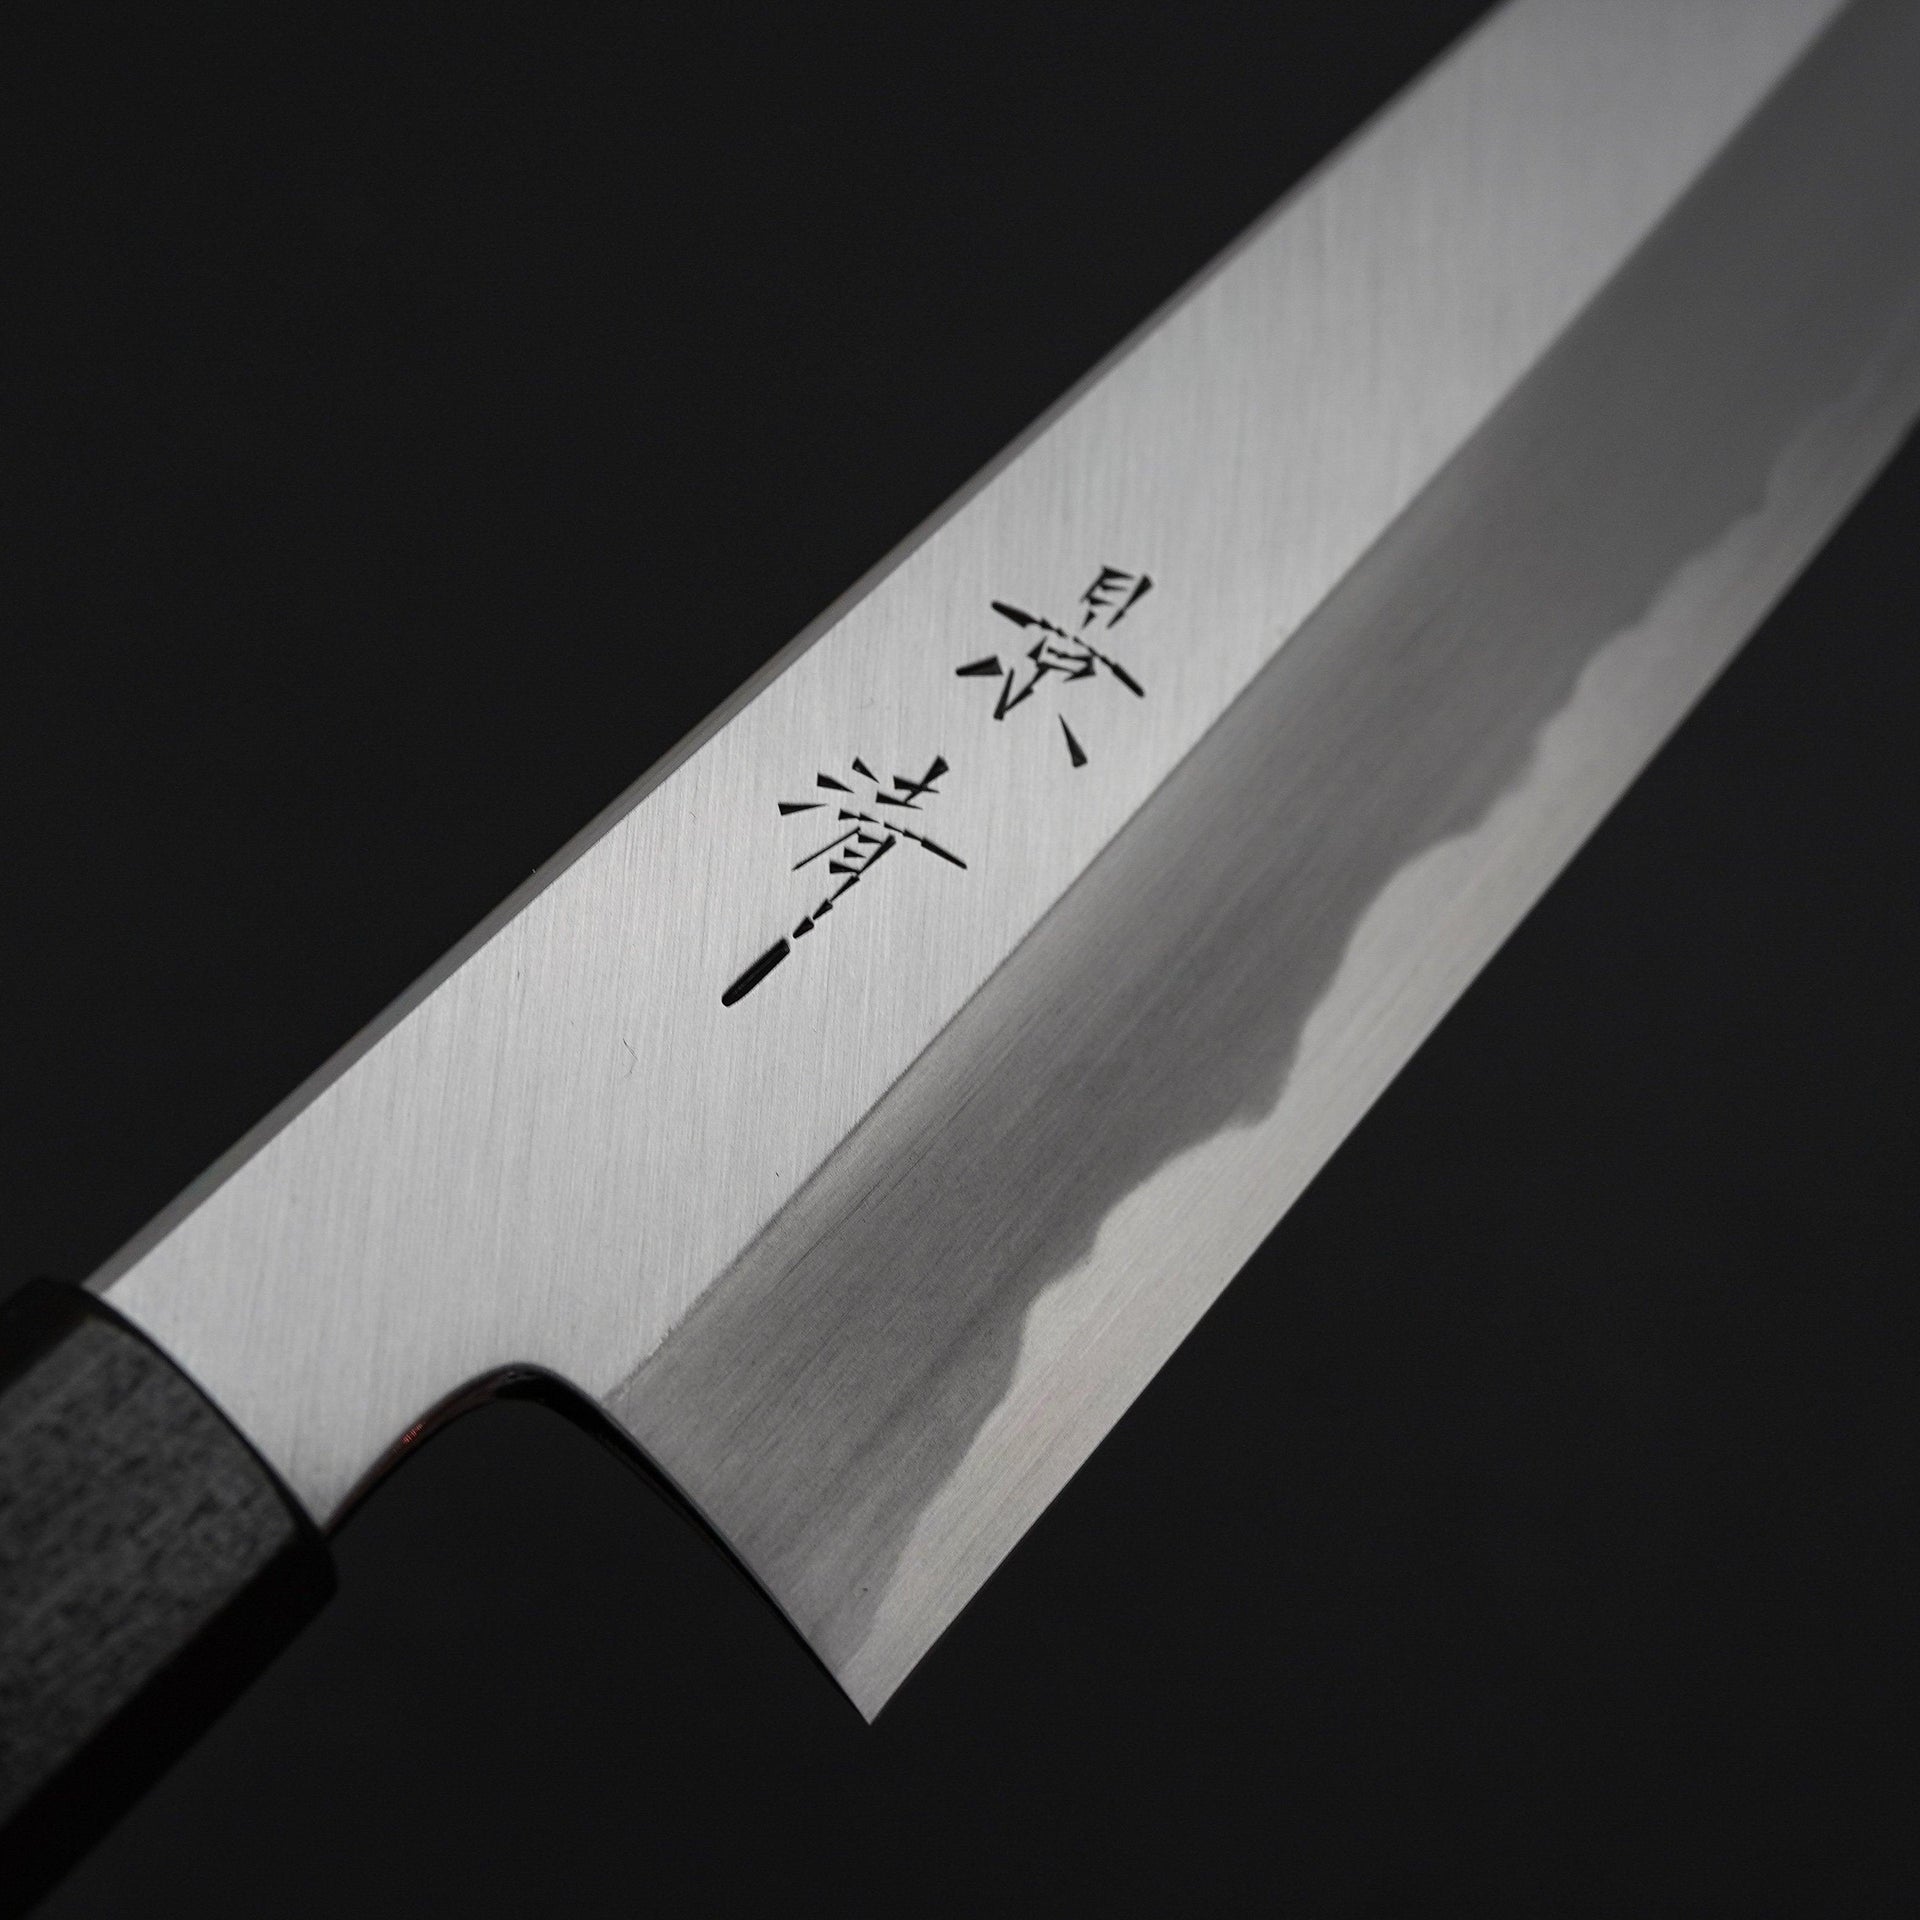 Kagekiyo White#2 Kiritsuke Gyuto 240mm-Knife-Kagekiyo-Carbon Knife Co